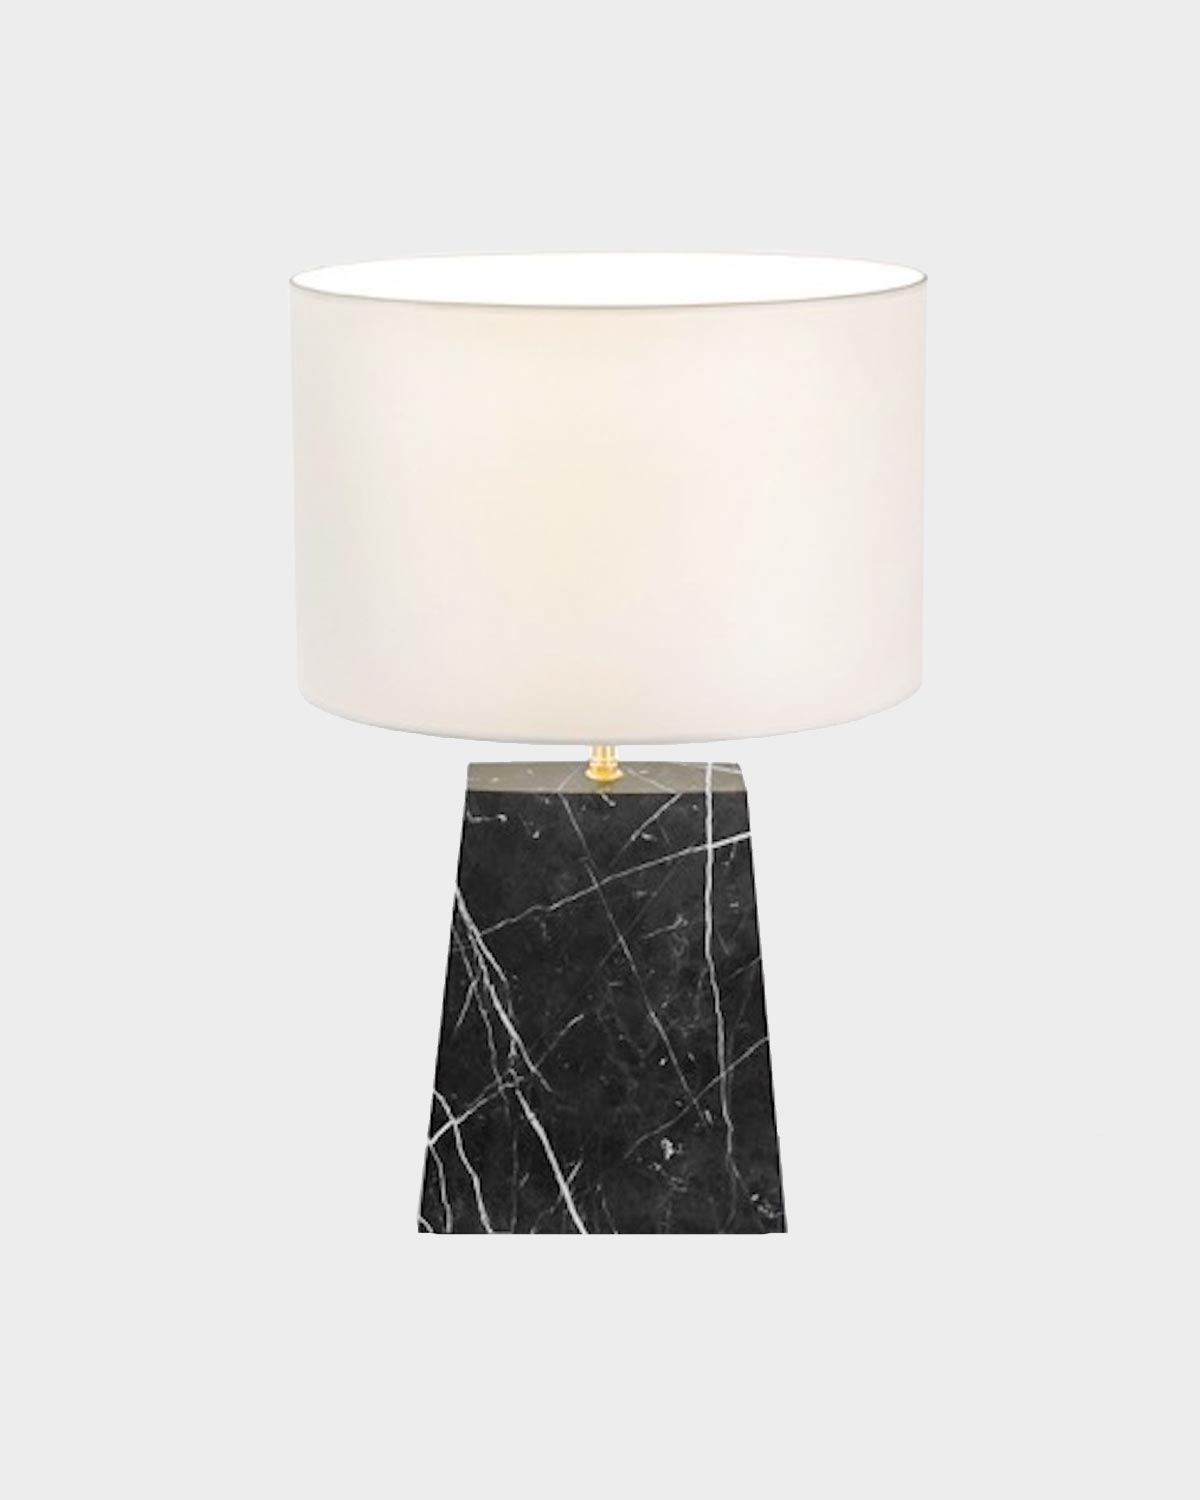 The Noe Table Lamp by Julien Barrault